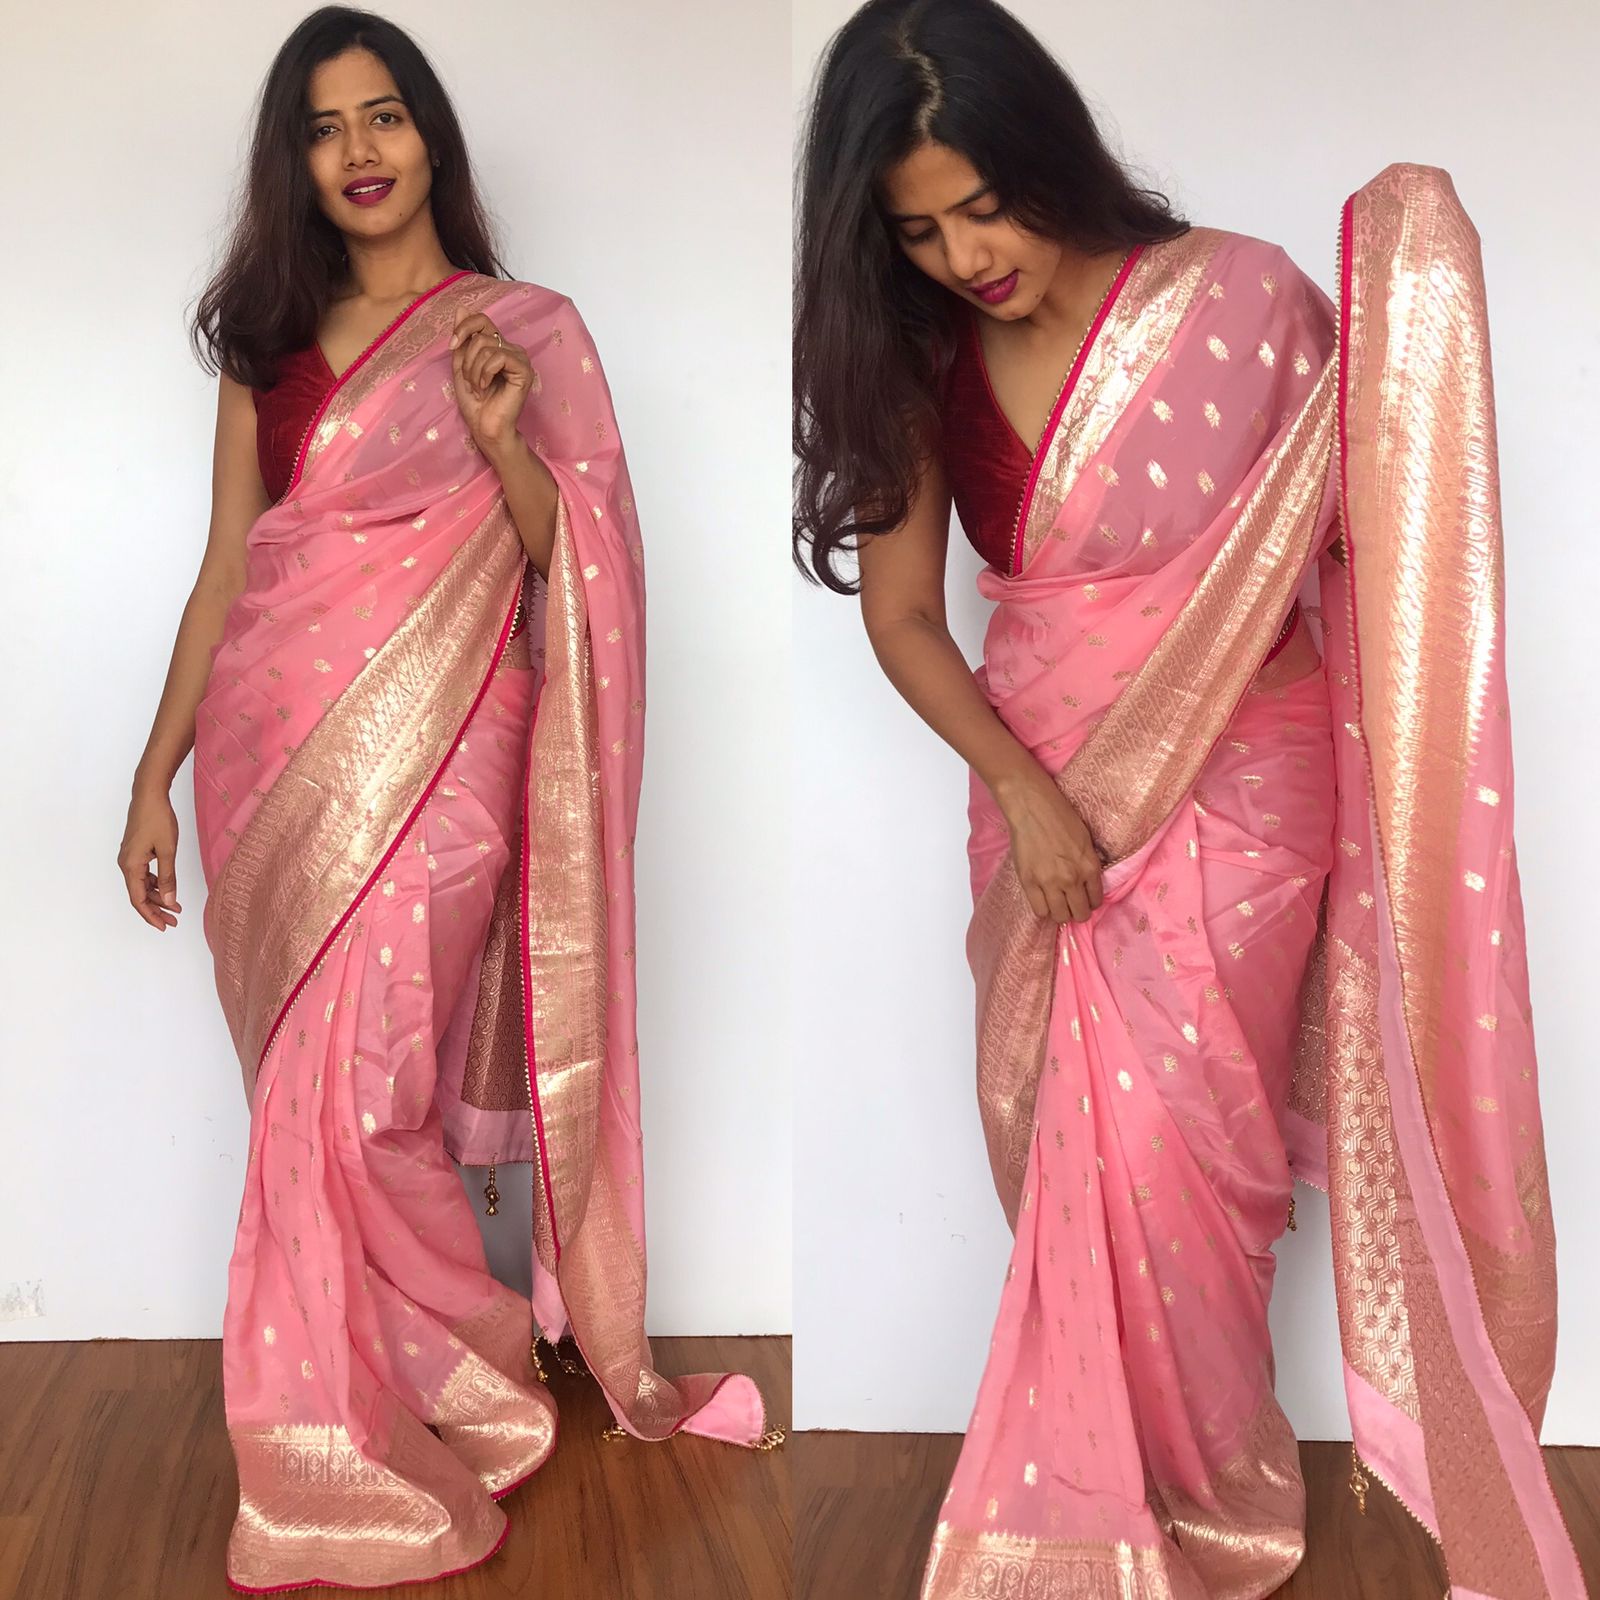 Top 5 Traditional Saree Designs For Diwali Look 2021